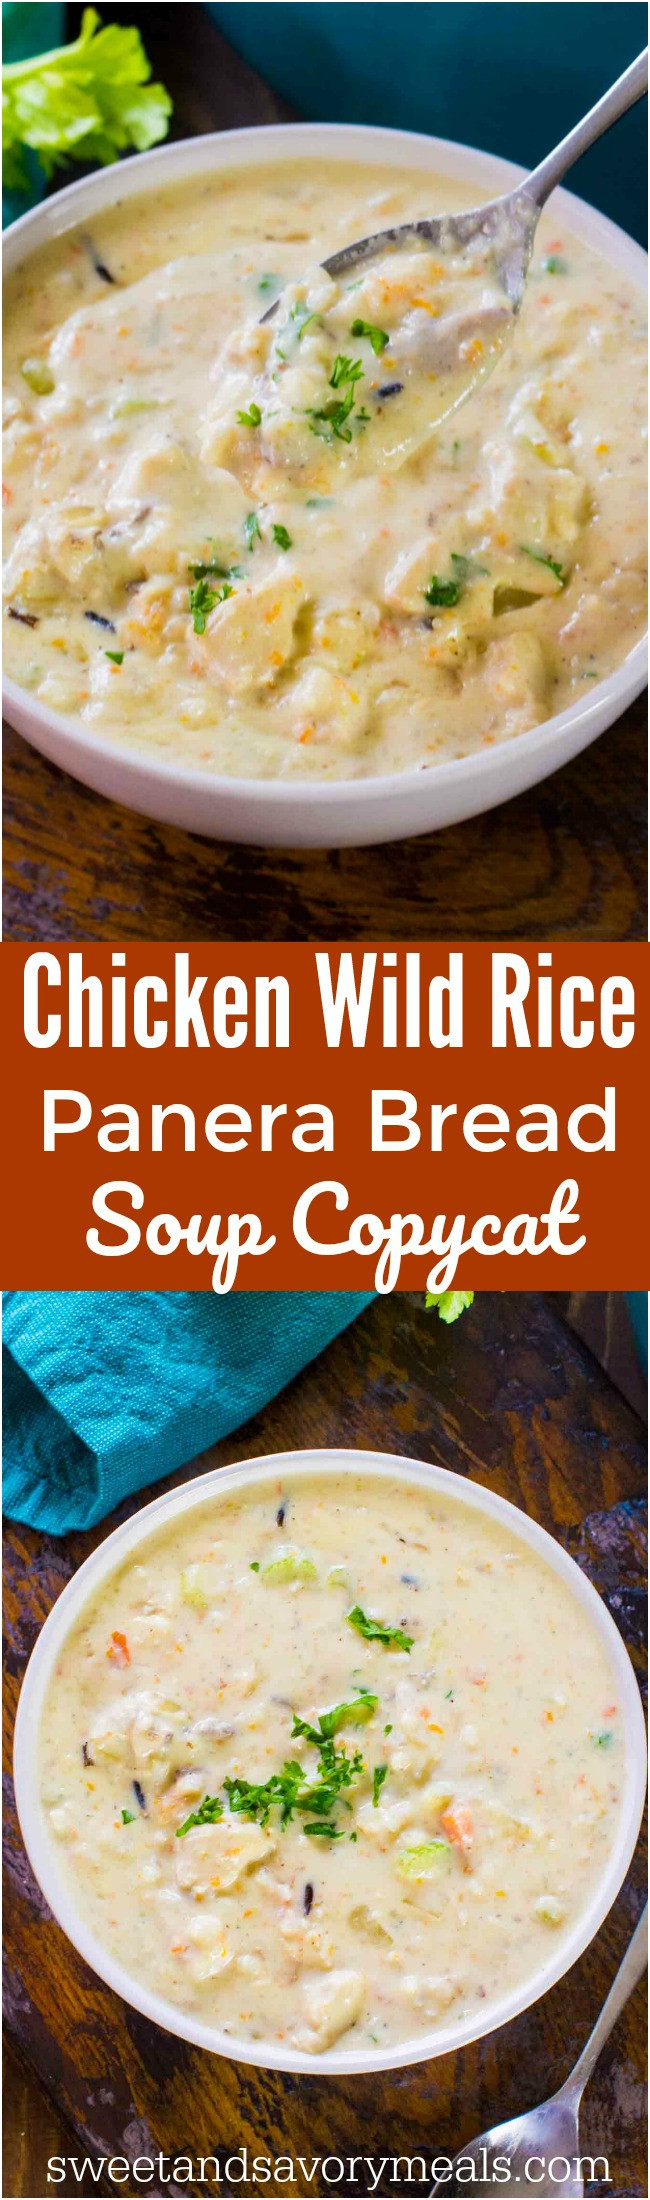 Panera Chicken And Wild Rice Soup
 Panera Bread Chicken Wild Rice Soup Copycat Sweet and